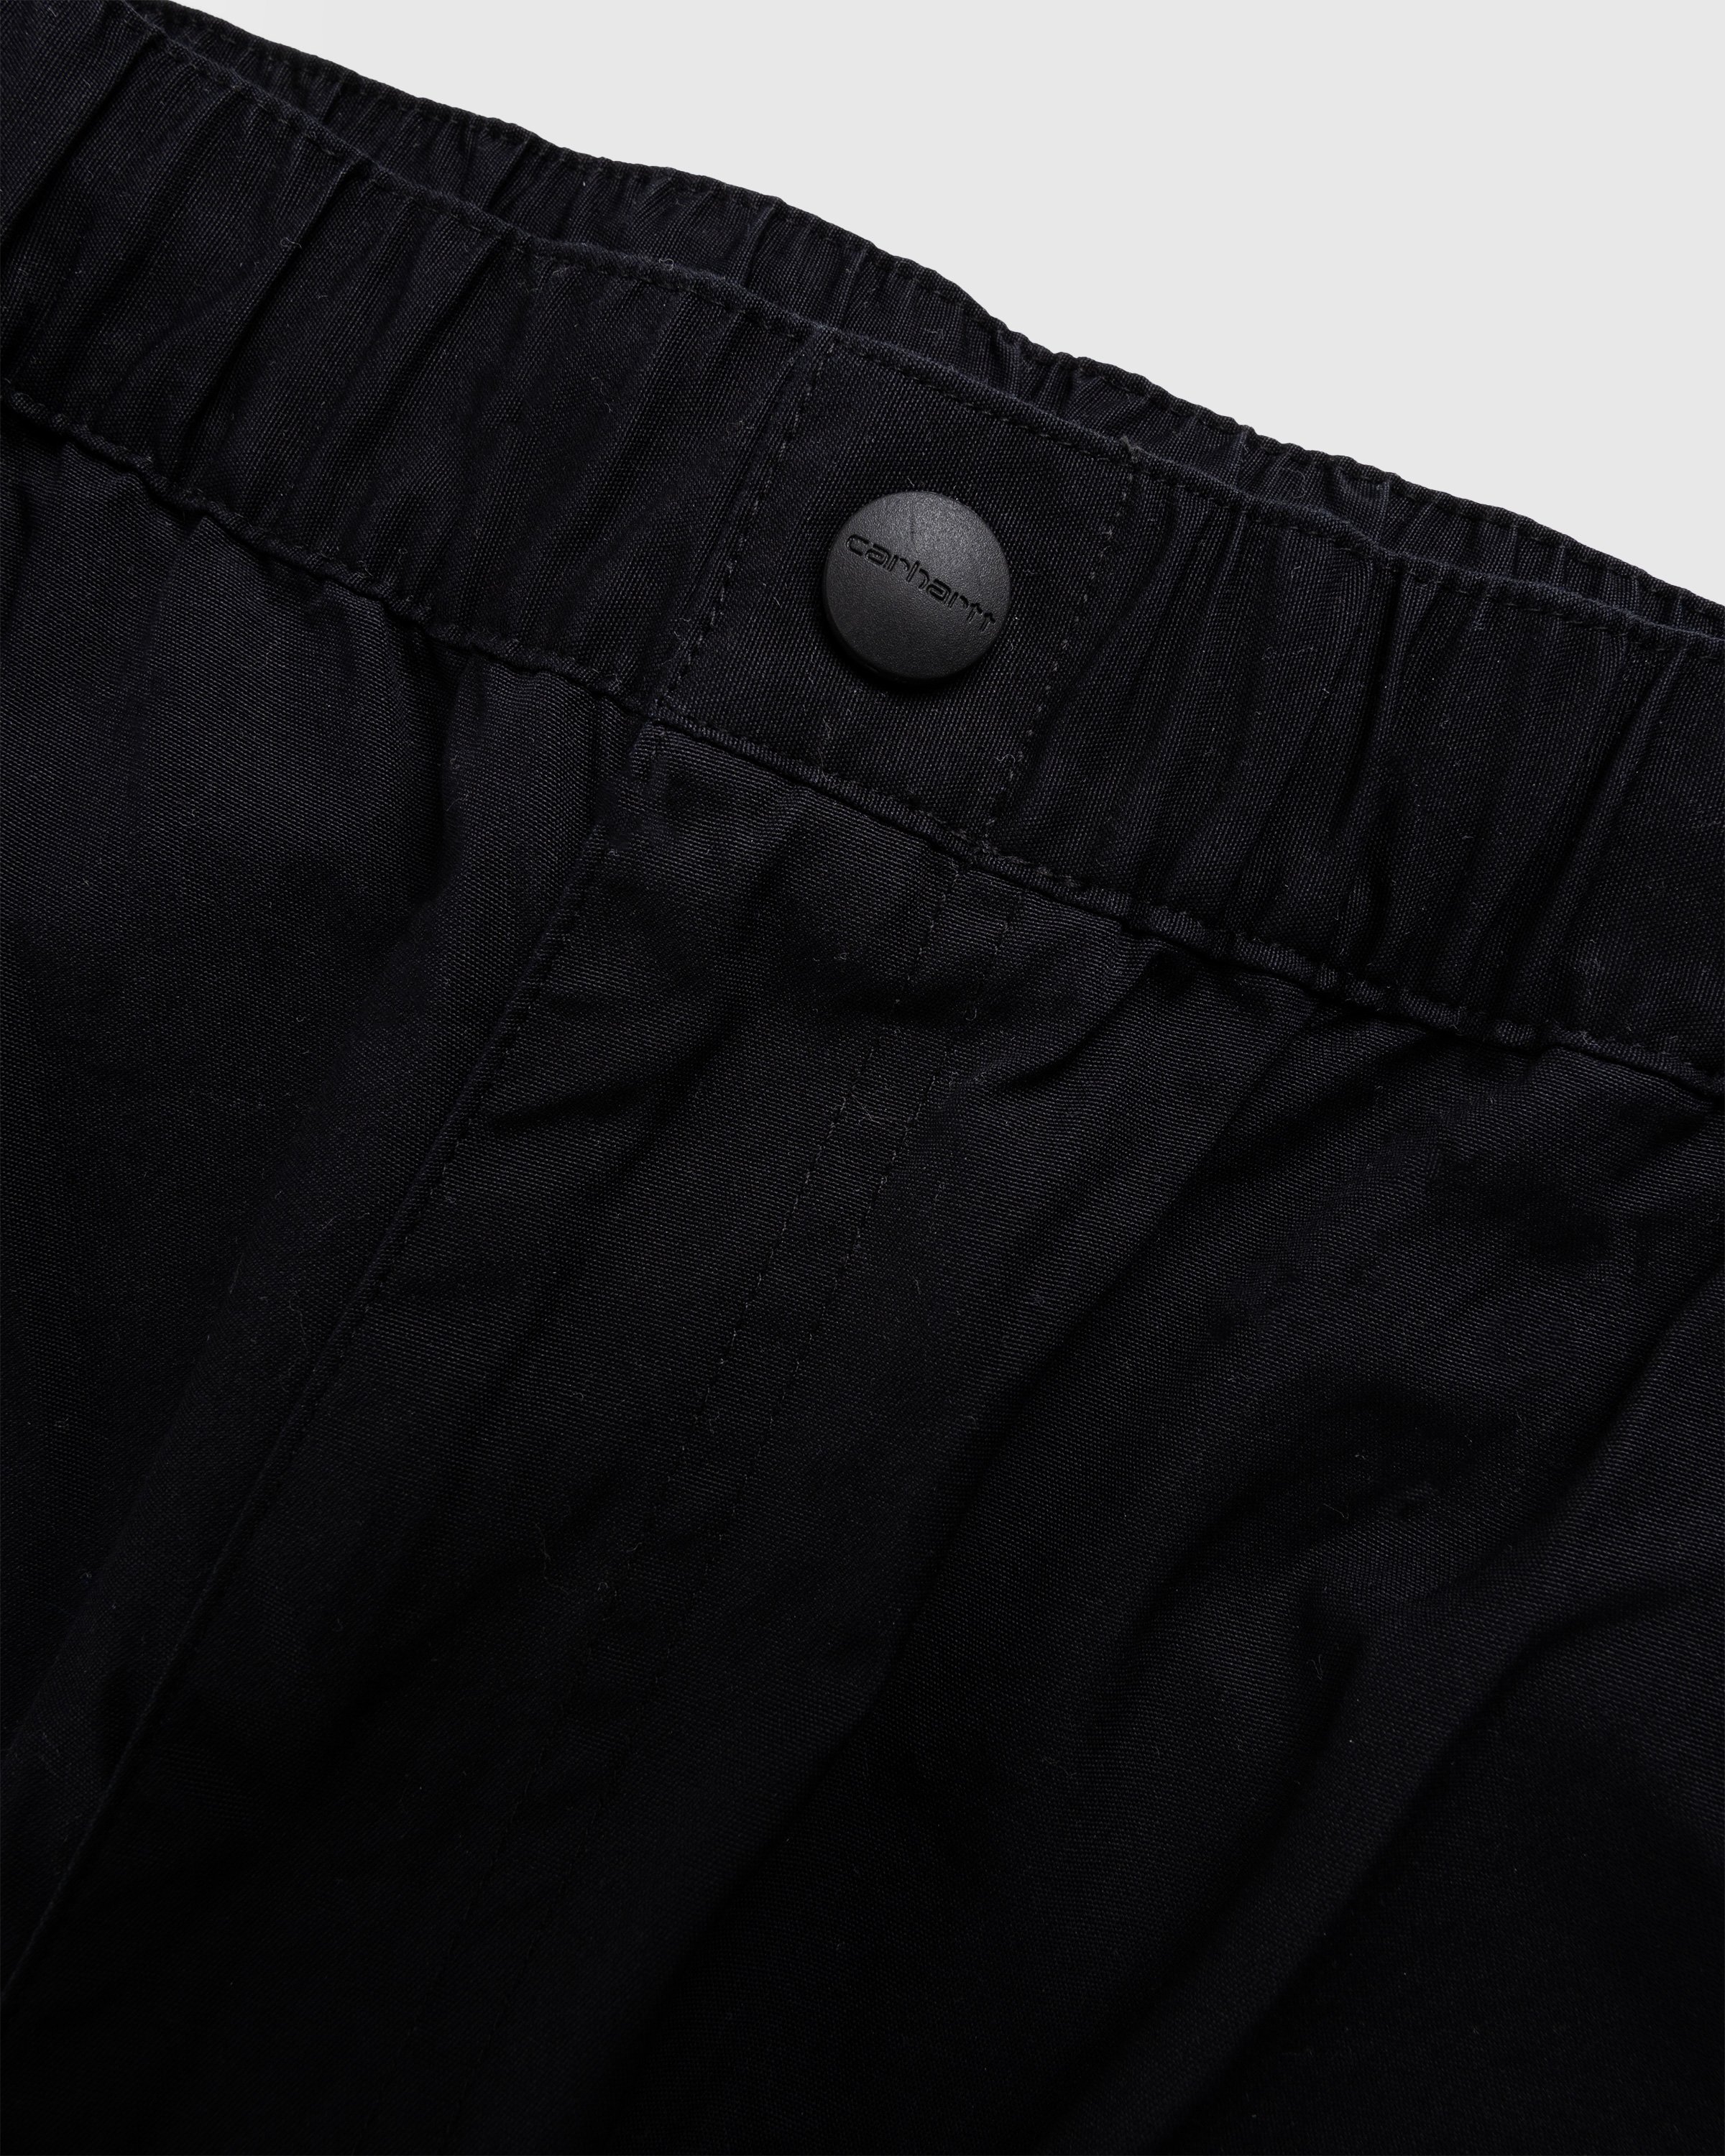 Carhartt WIP - Tyler Pant Black - Clothing - Black - Image 4